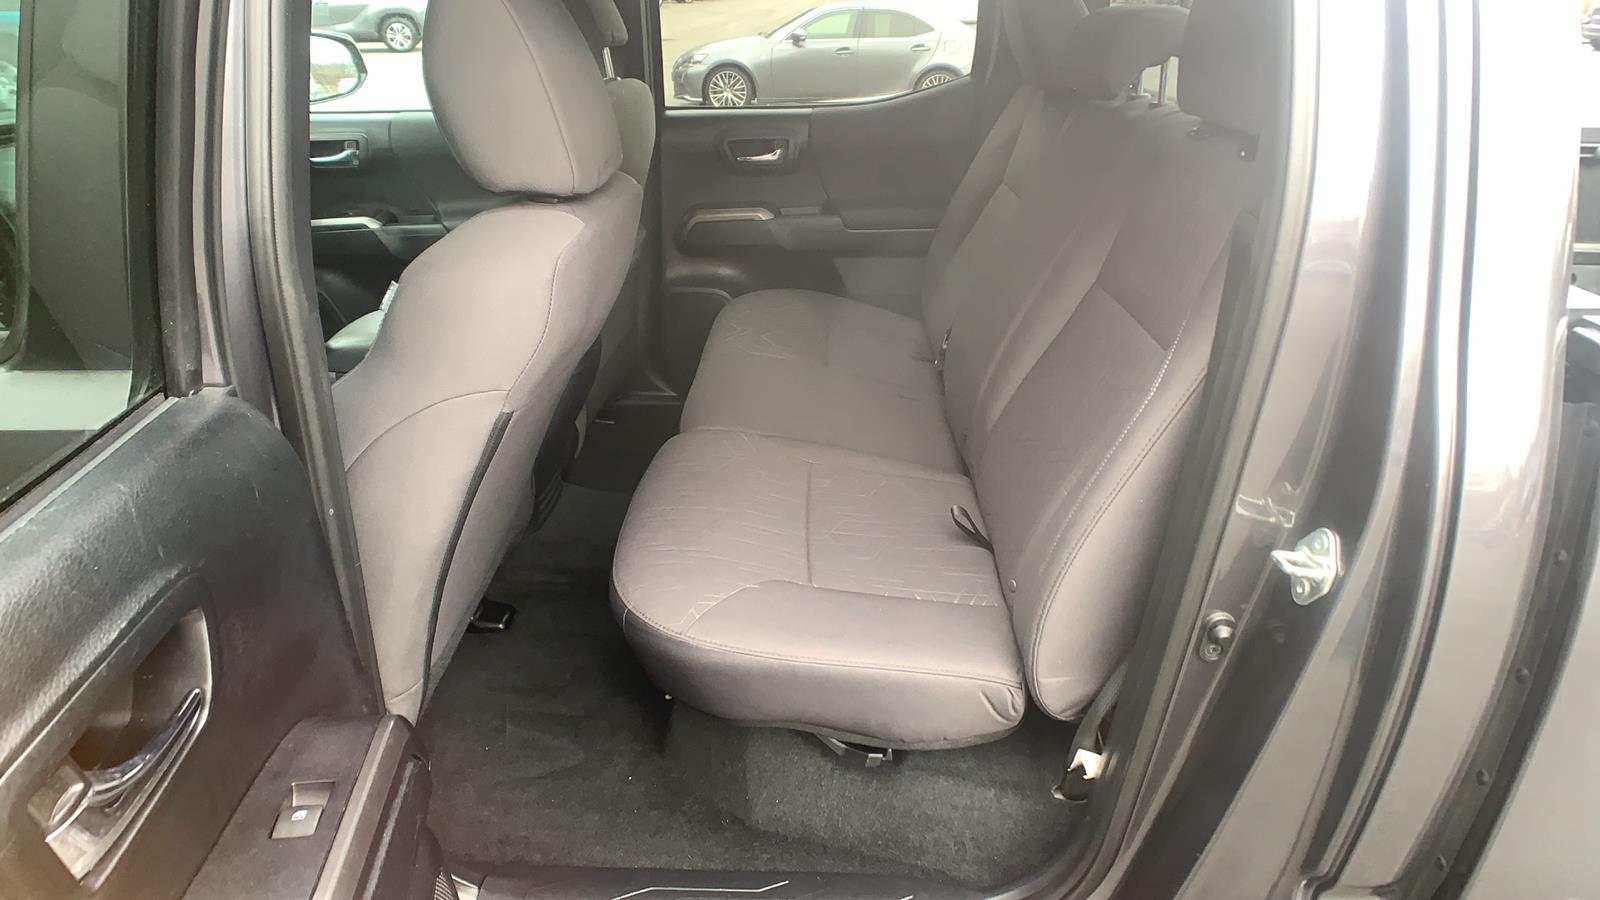 2018 Toyota Tacoma Short Bed,Crew Cab Pickup